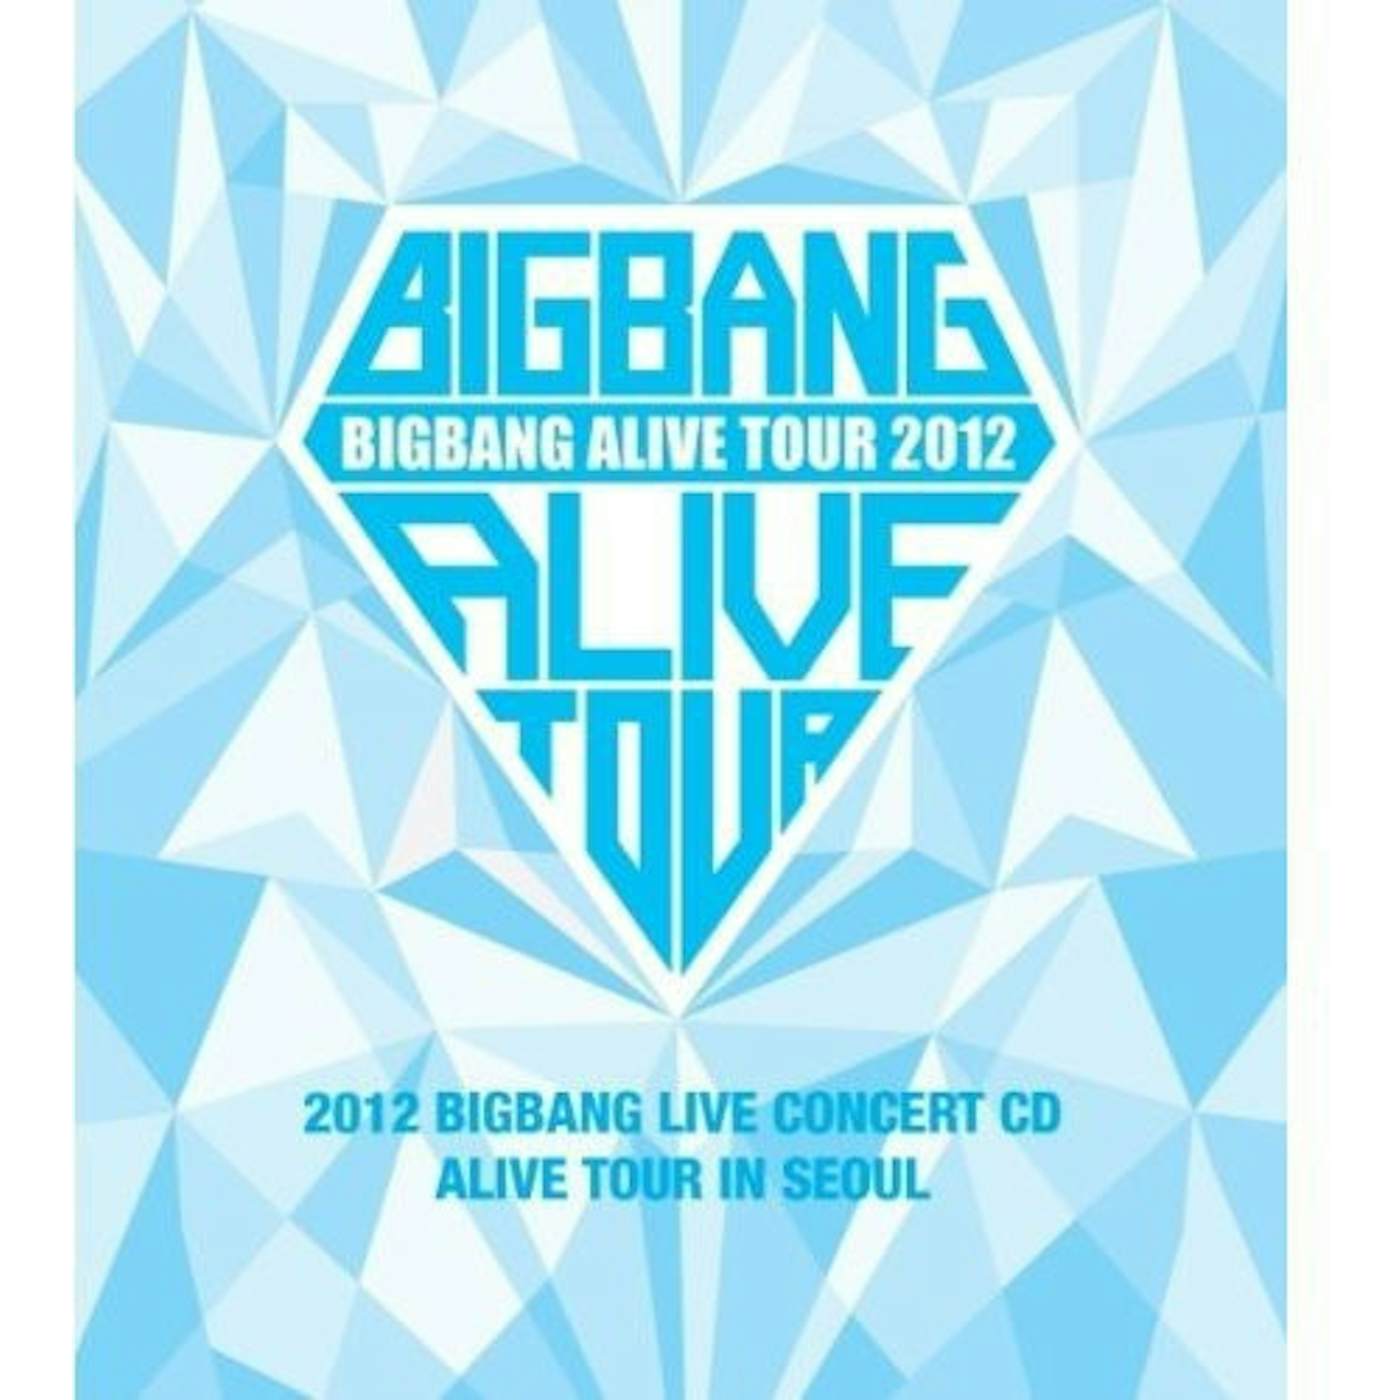 ALIVE TOUR IN SEOUL: 2012 BIGBANG LIVE CONCERT CD